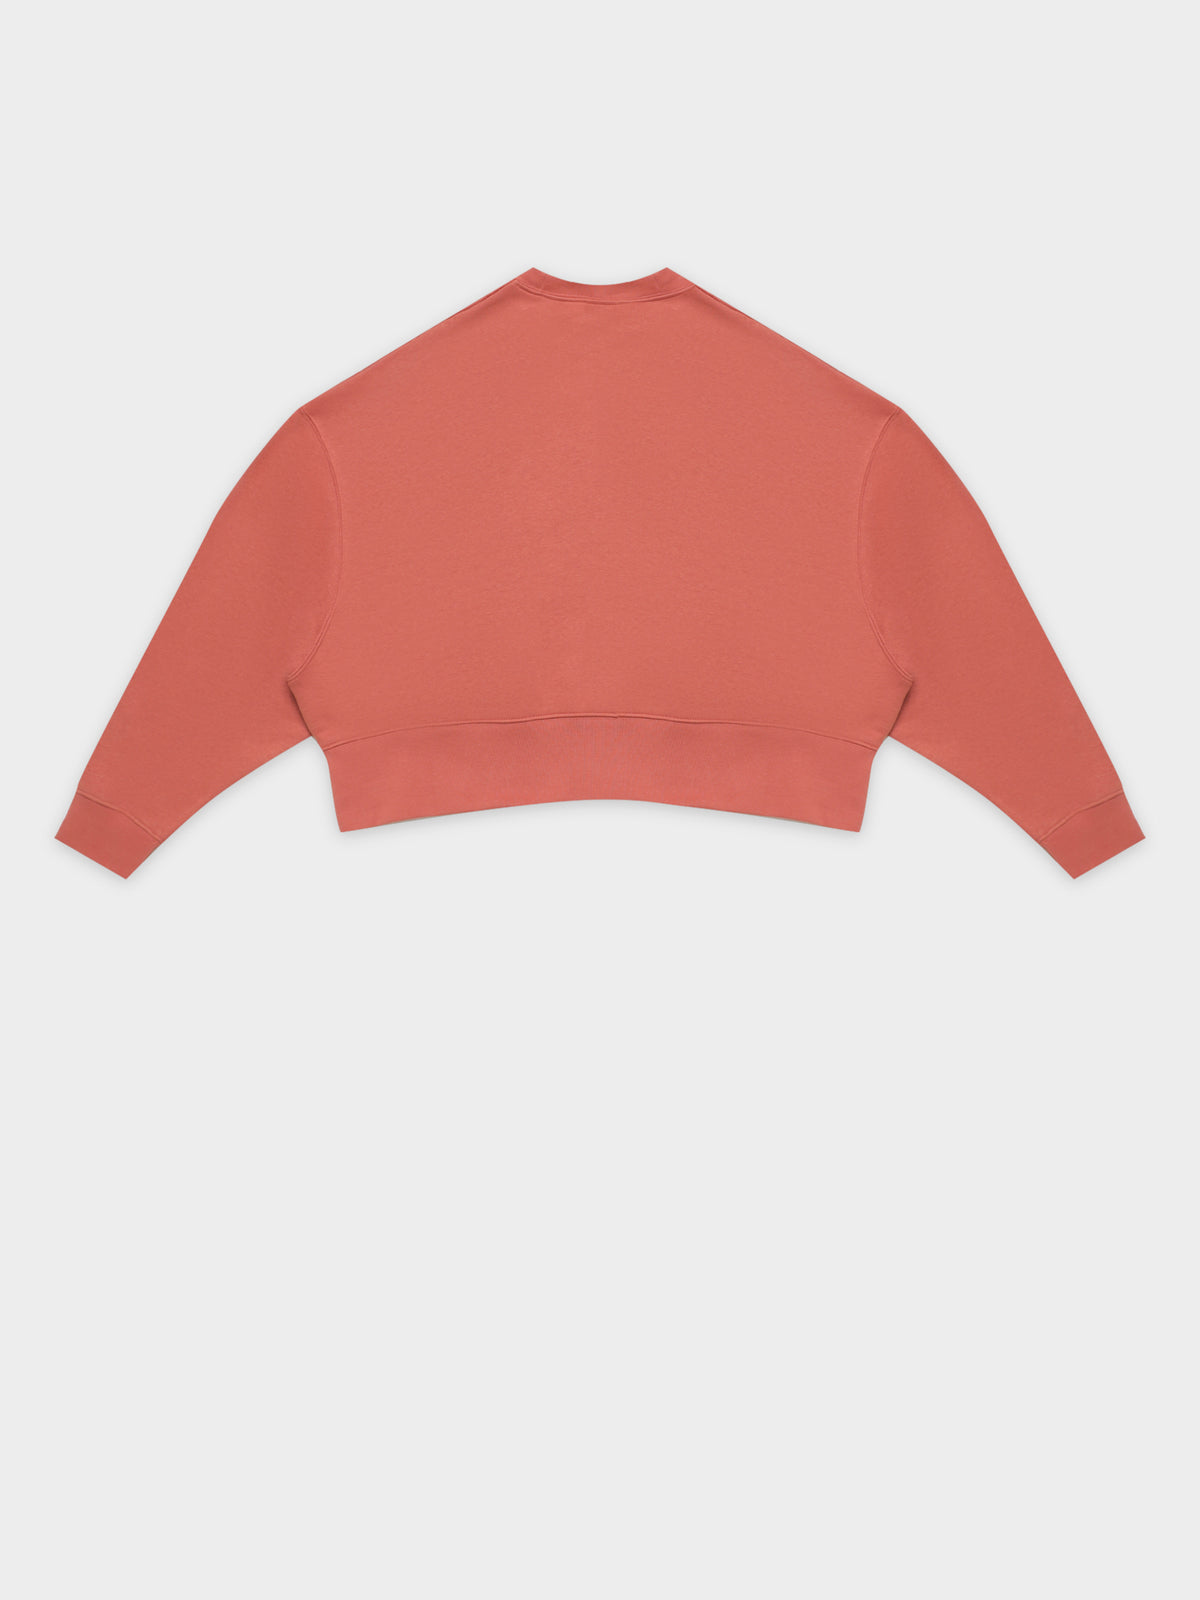 Sportswear Essential Collection Fleece Oversized Crew Sweatshirt in Madder Root Red